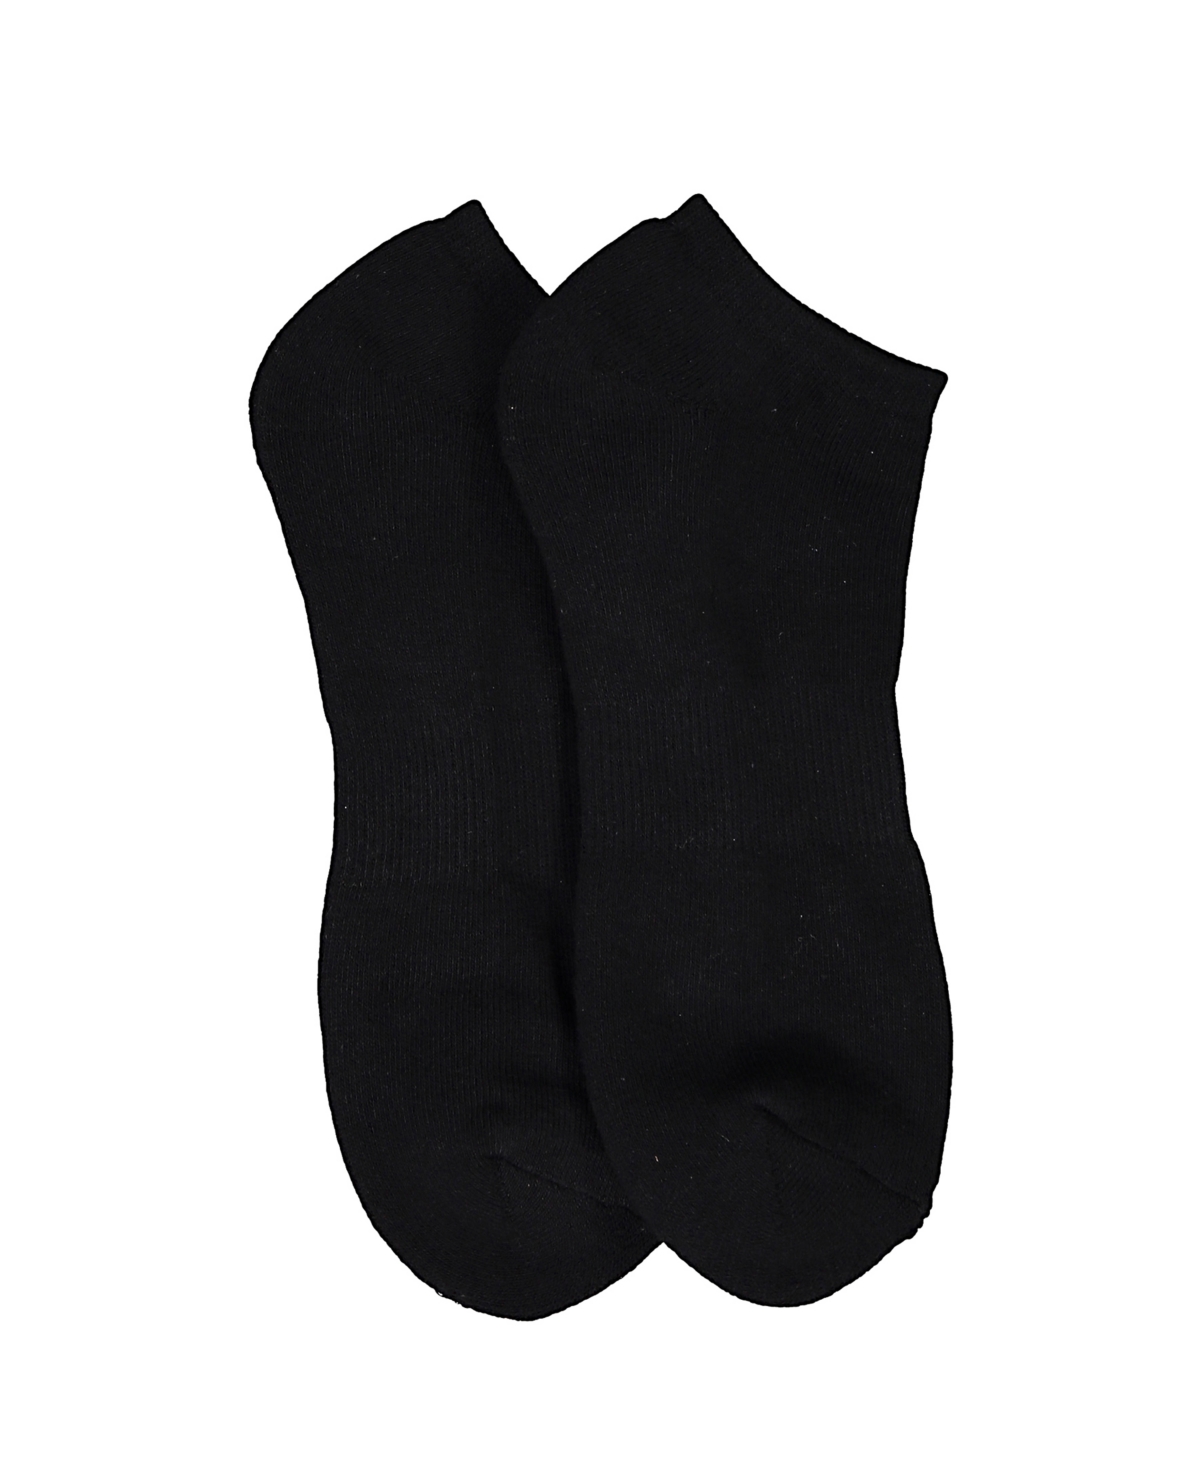 Ankle Socks 2 Pack - Black